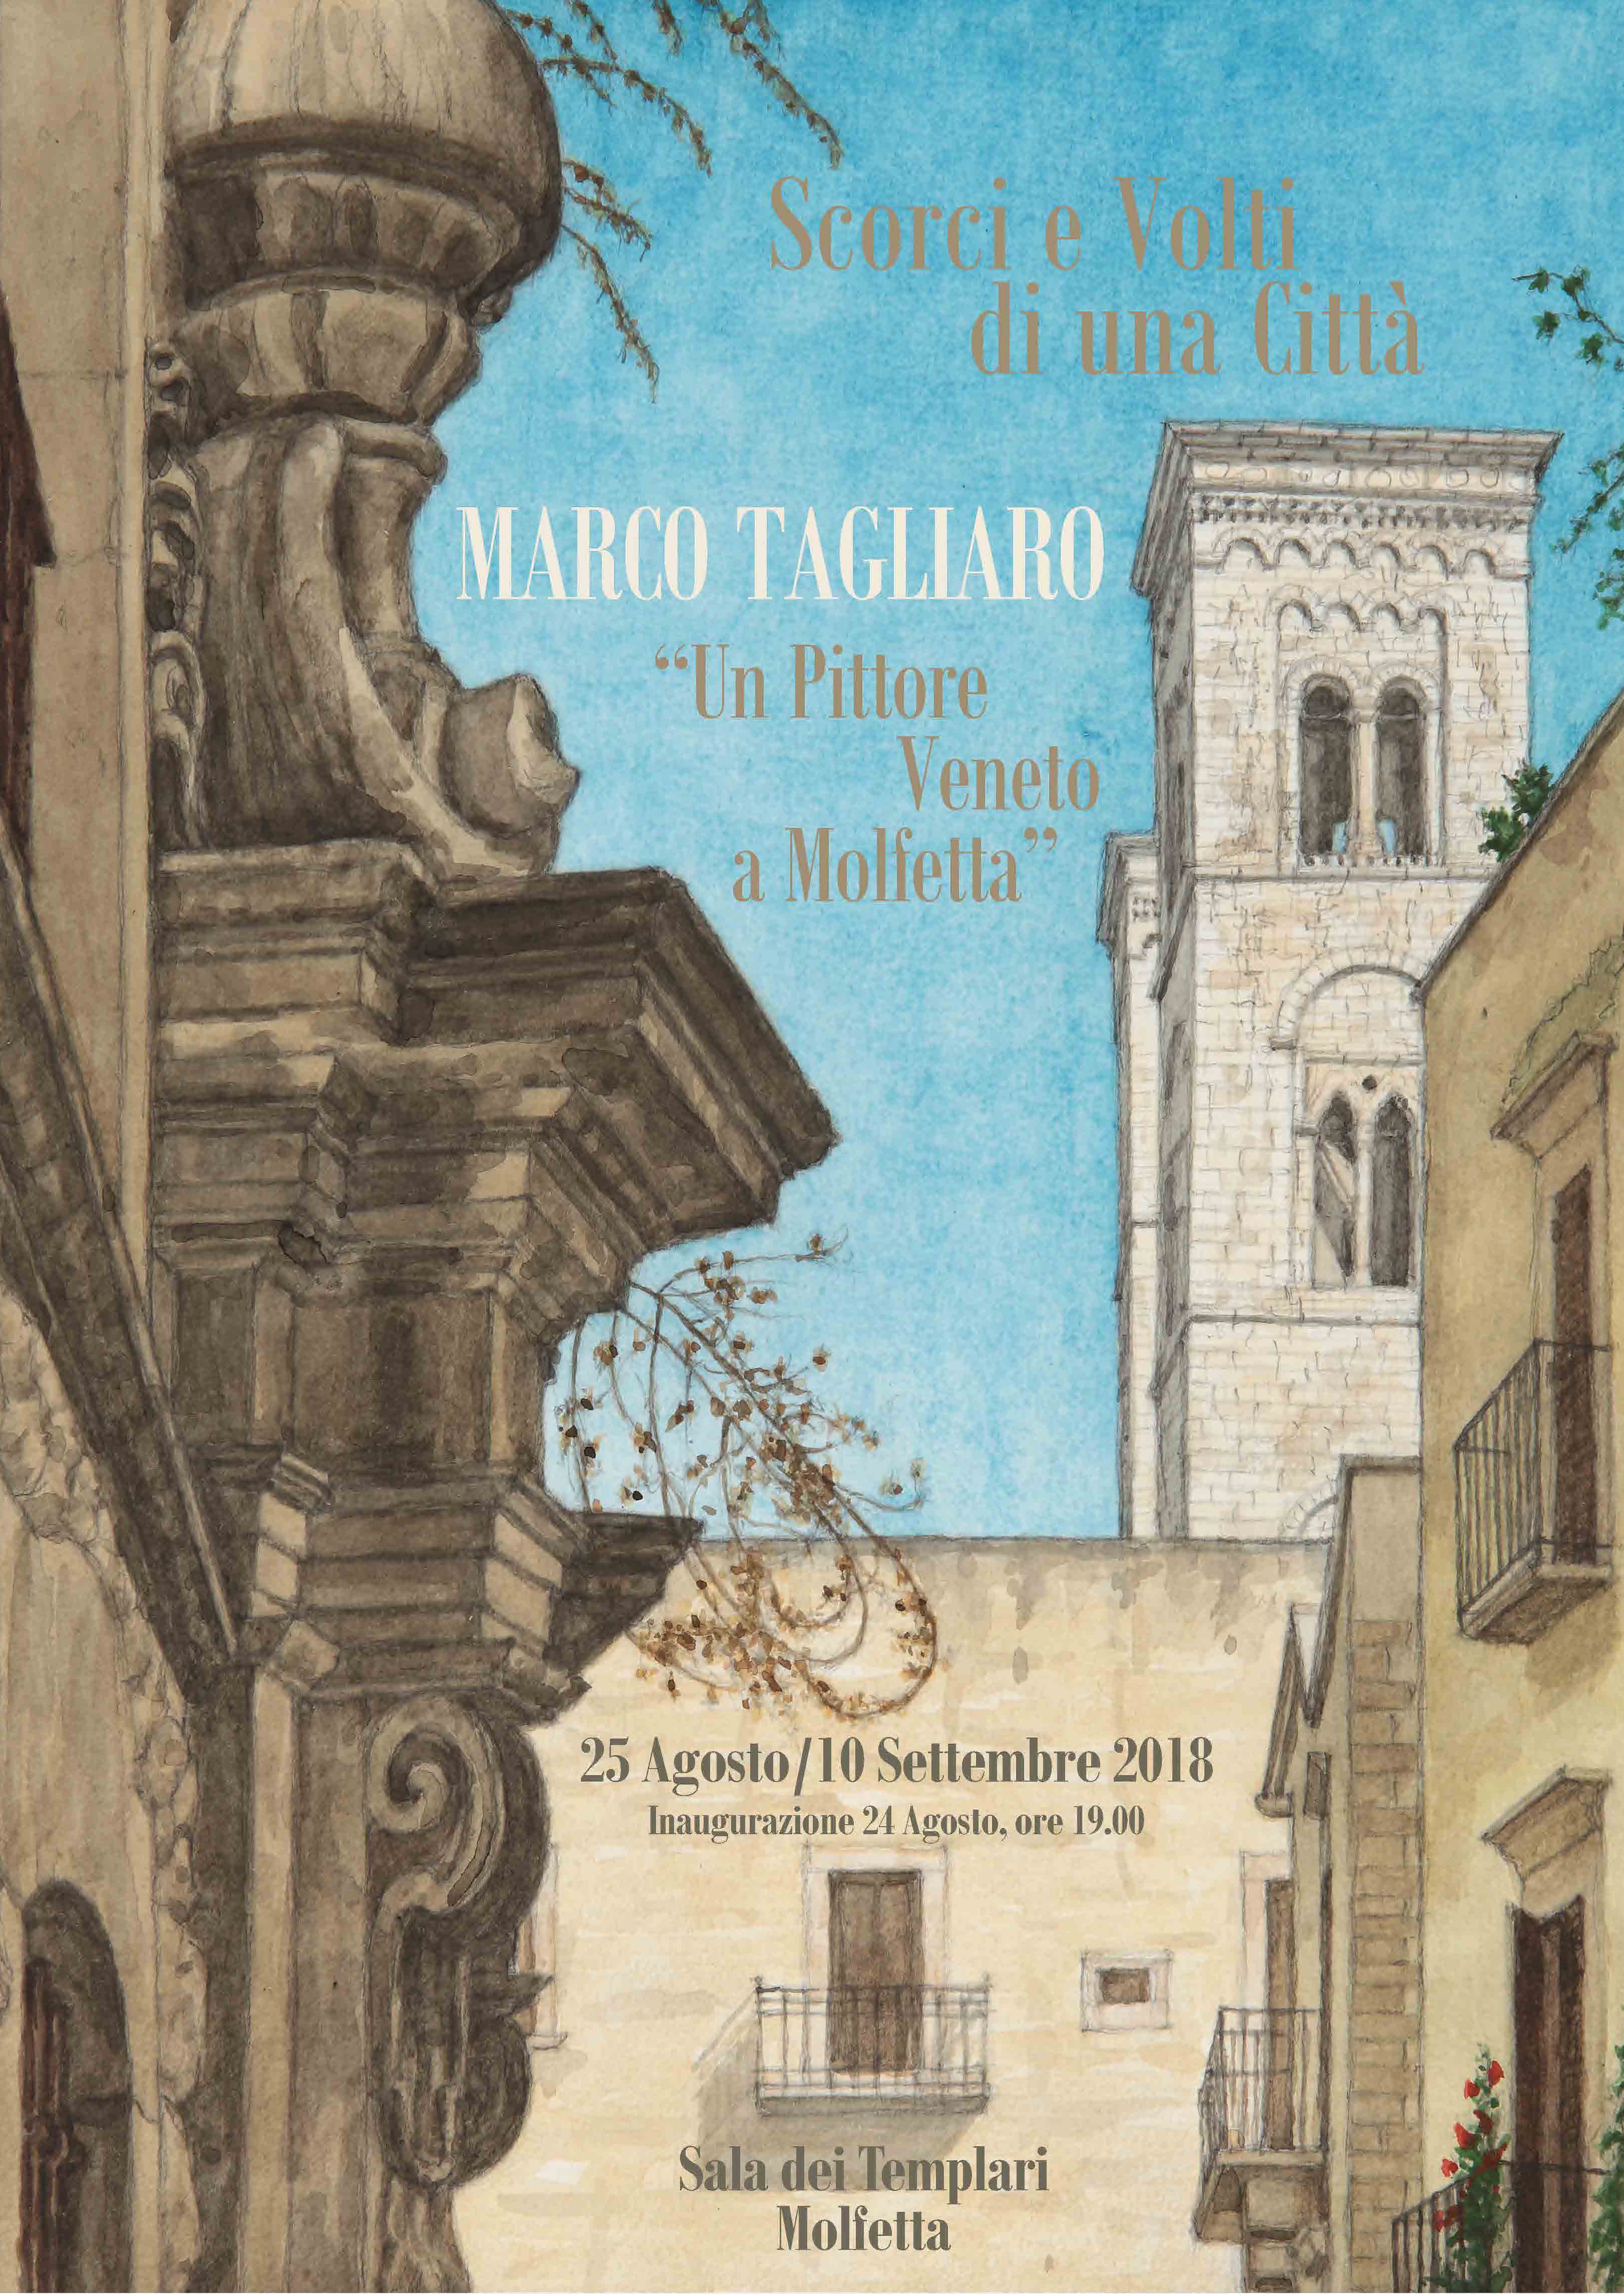 Marco Tagliaro a venetian Painter in Molfetta